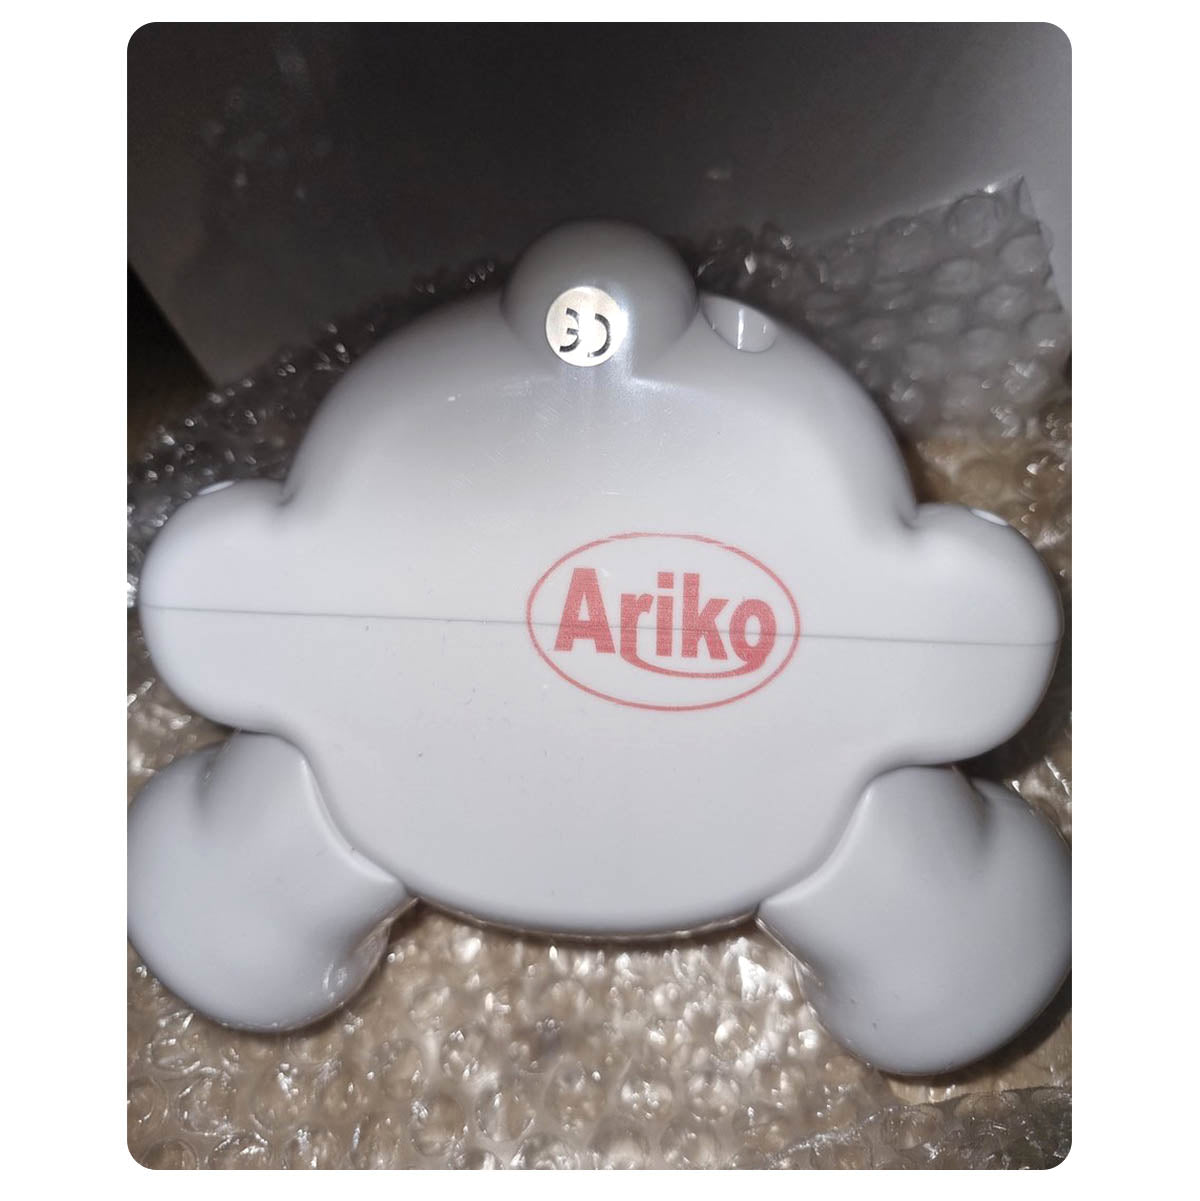 Ariko XL Bär Tischlampe Kinderzimmer Babyzimmer – Nachtlicht – LED dimmbar – 3 Stufen dimmbar – Rosa – Teddybär